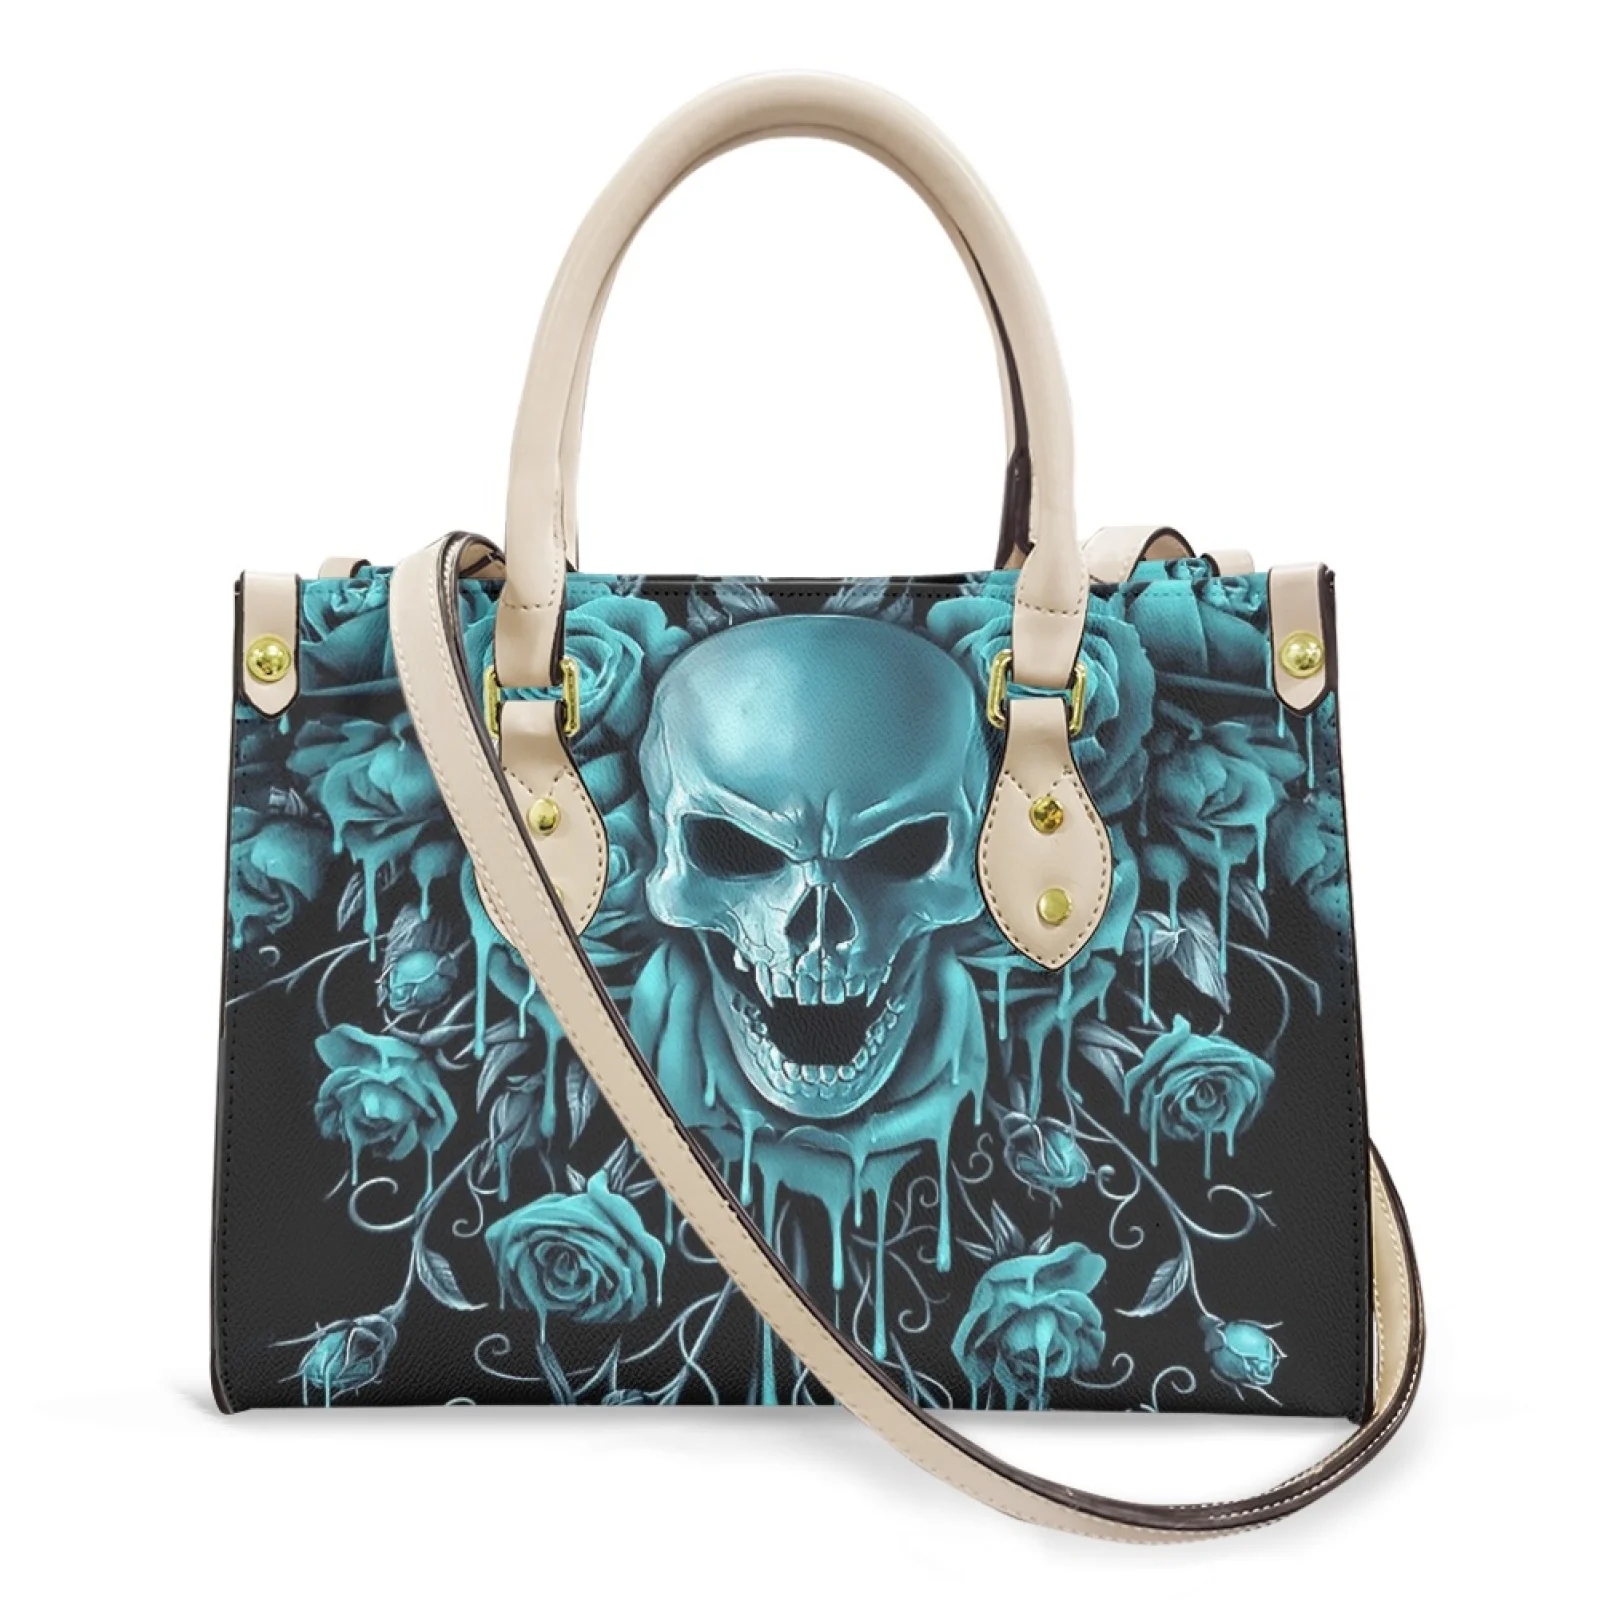 

Belidome Skull Gothic Design Luxury Handbags for Women PU Leather Top Handle Satchel Shoulder Bags Messenger Tote Bag for Ladies